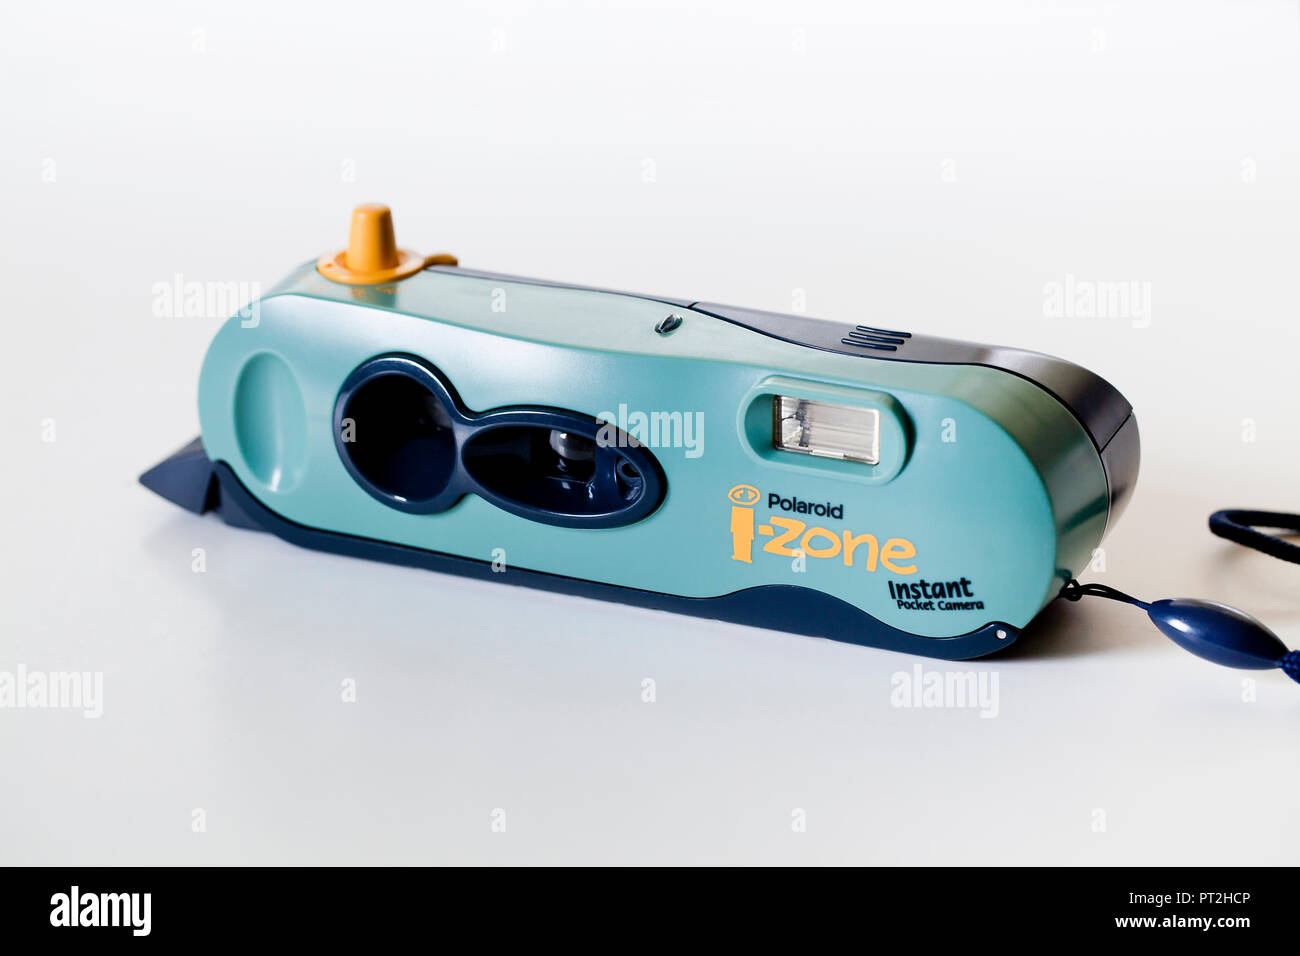 Cámara polaroid para niños fotografías e imágenes de alta resolución - Alamy